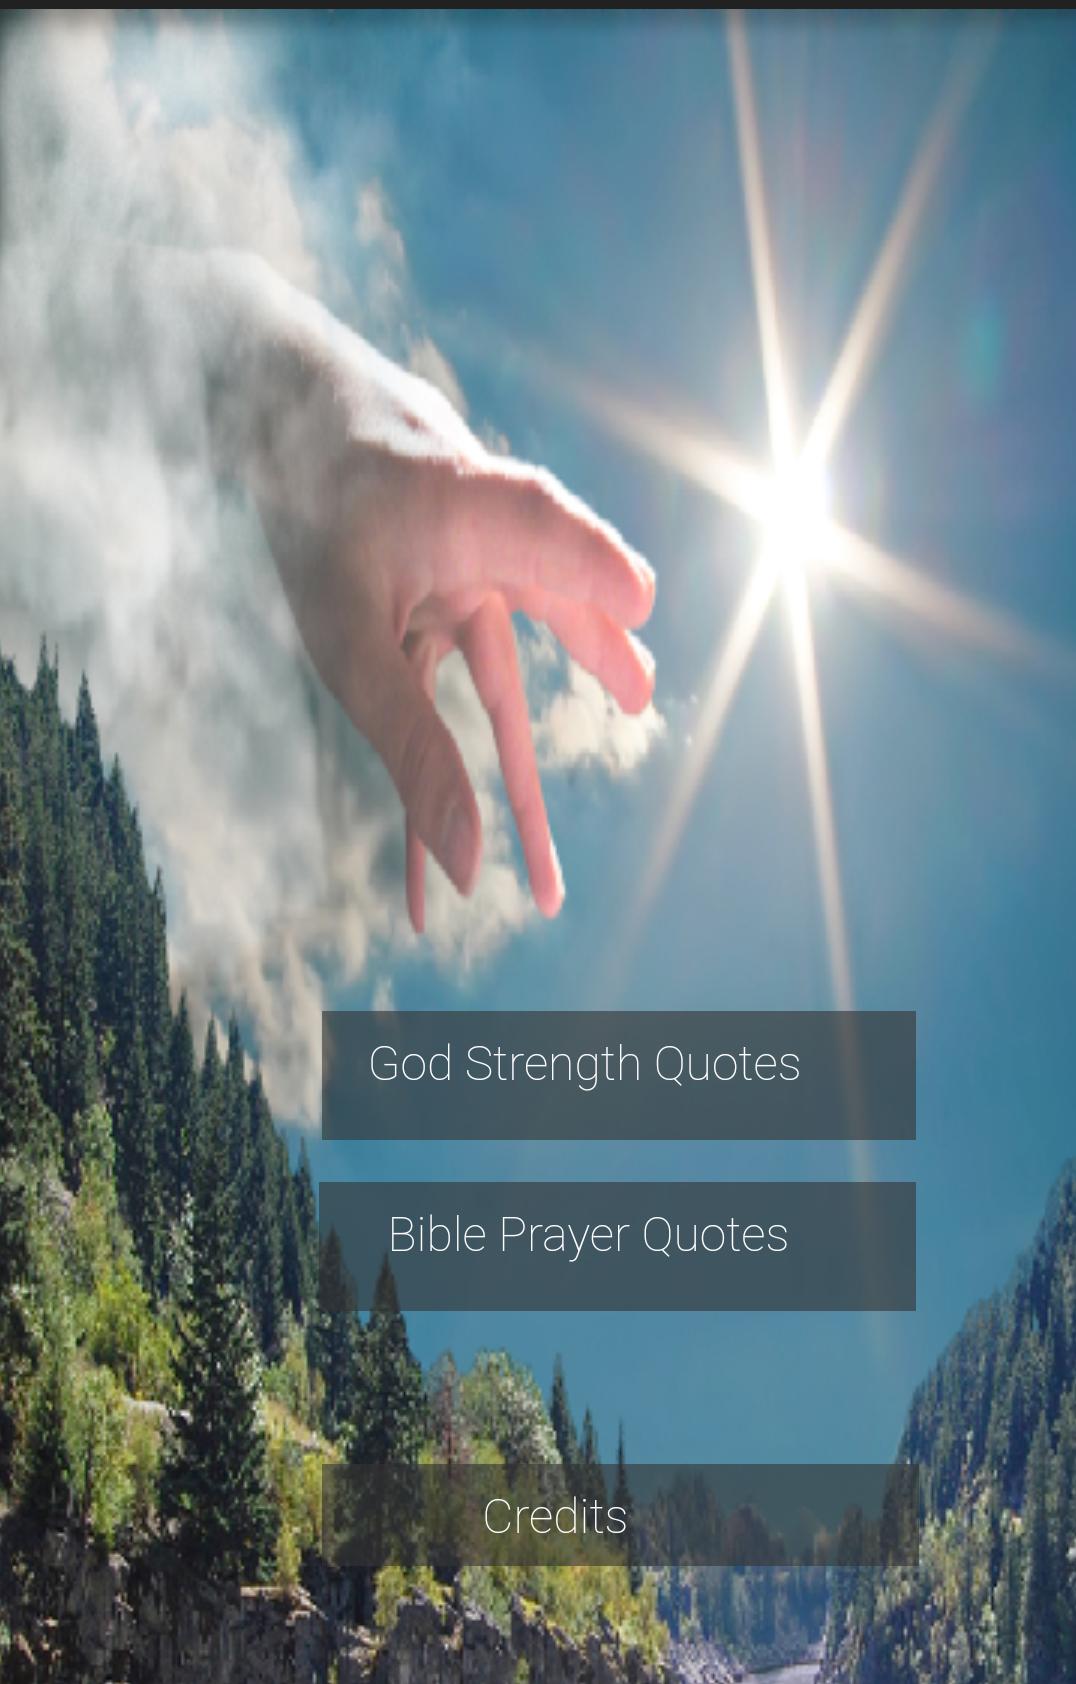 God's strength